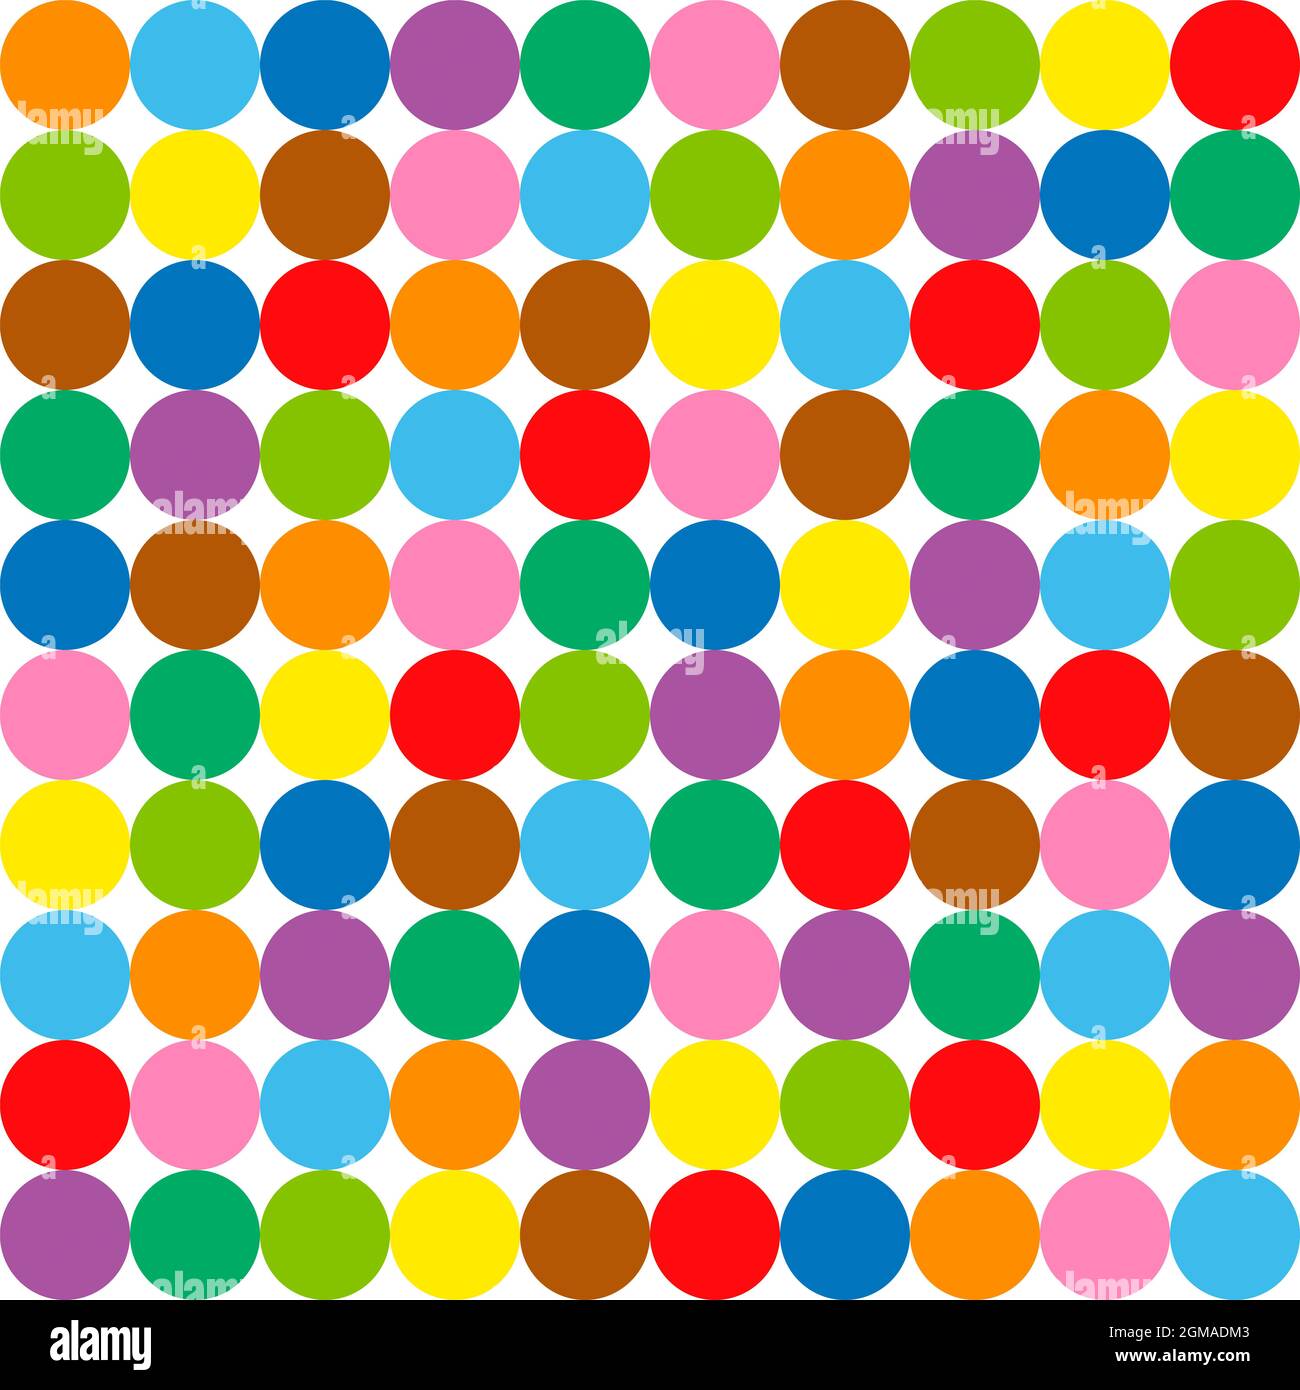 Bunte Kreis Muster Hintergrund. Hundert farbige Kugeln, nahtlose erweiterbare Illustration. Stockfoto